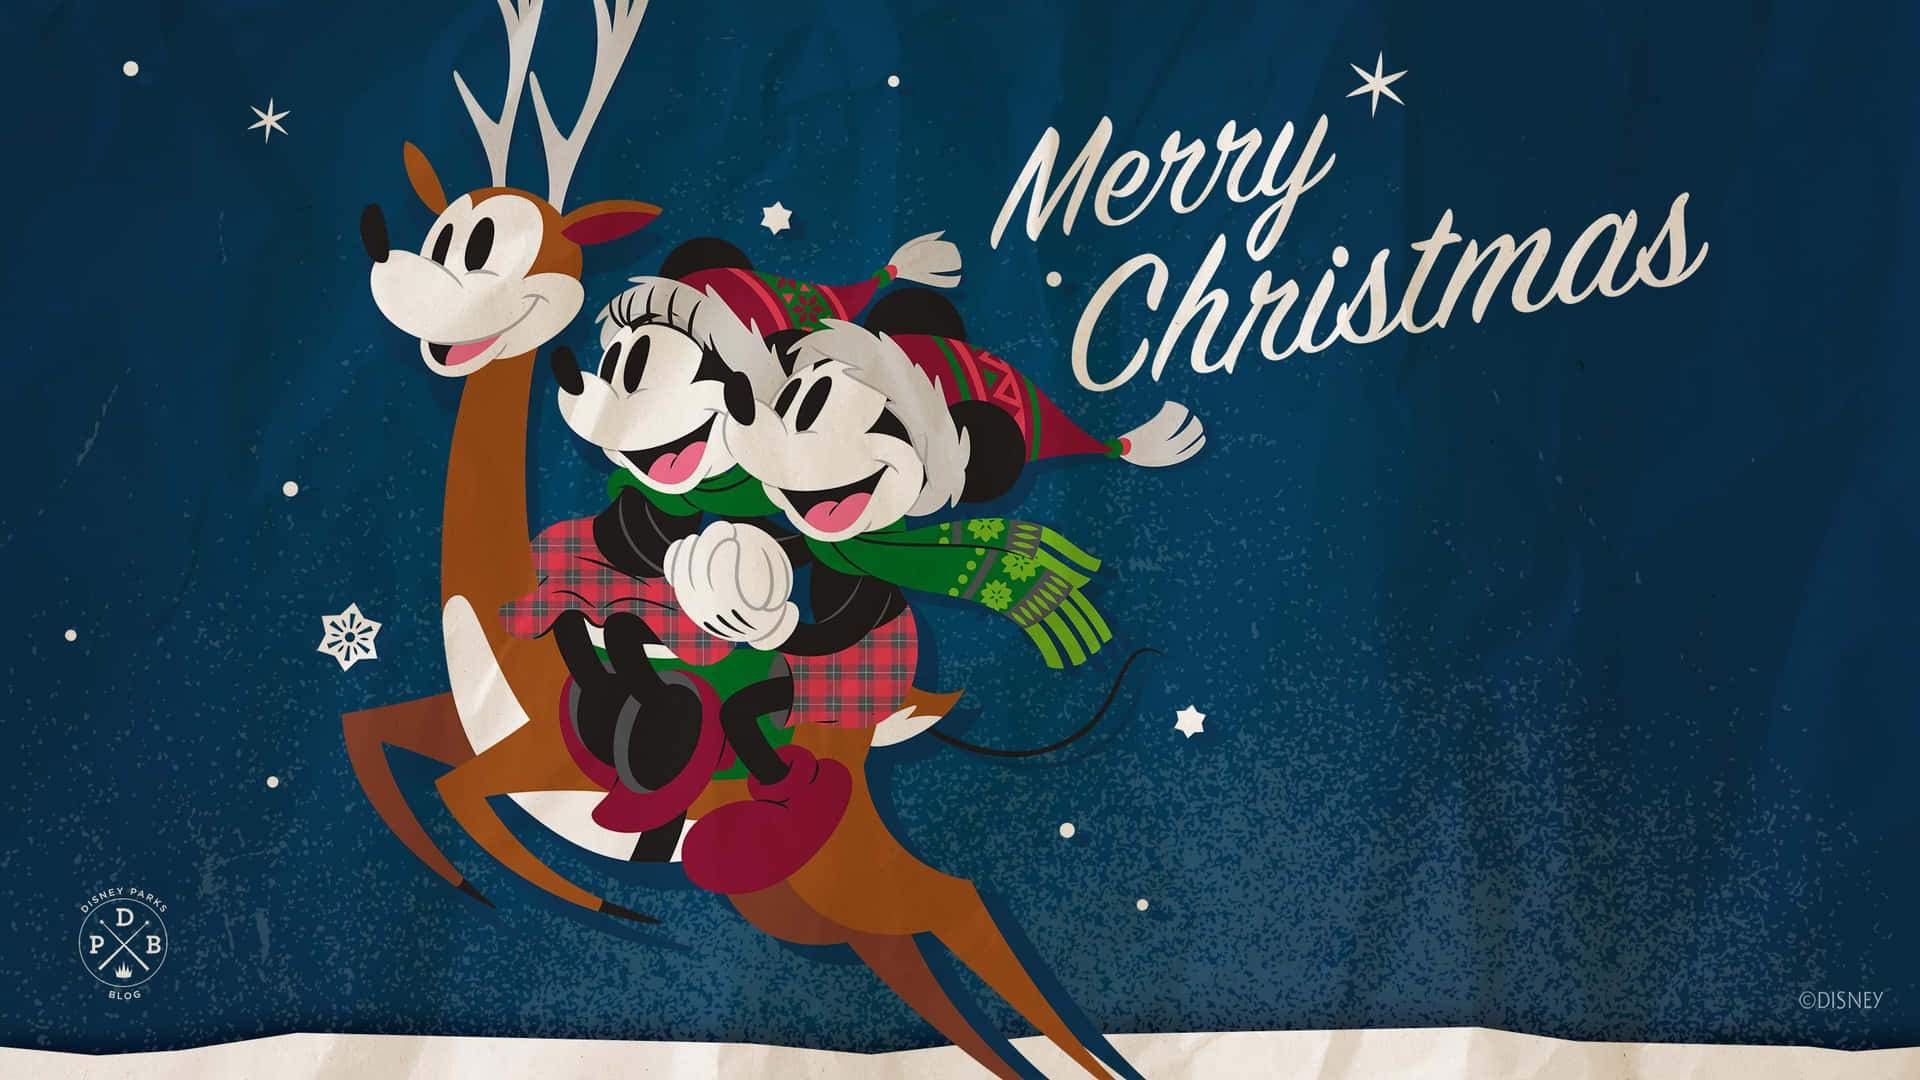 Make the Holidays Magical with a Disney Christmas Ipad Wallpaper